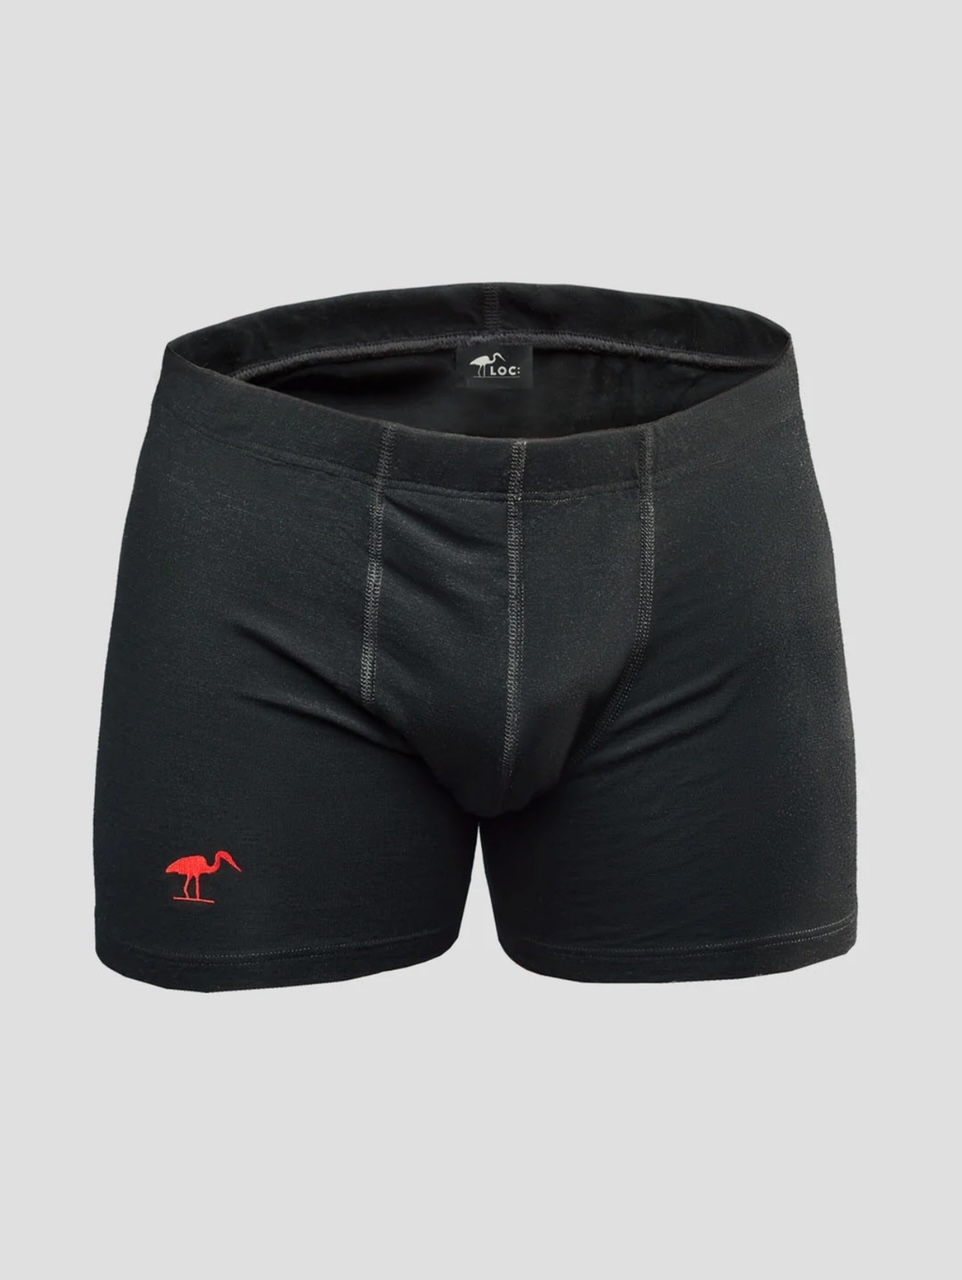 LOC Merino Boxer Shorts - Size XL